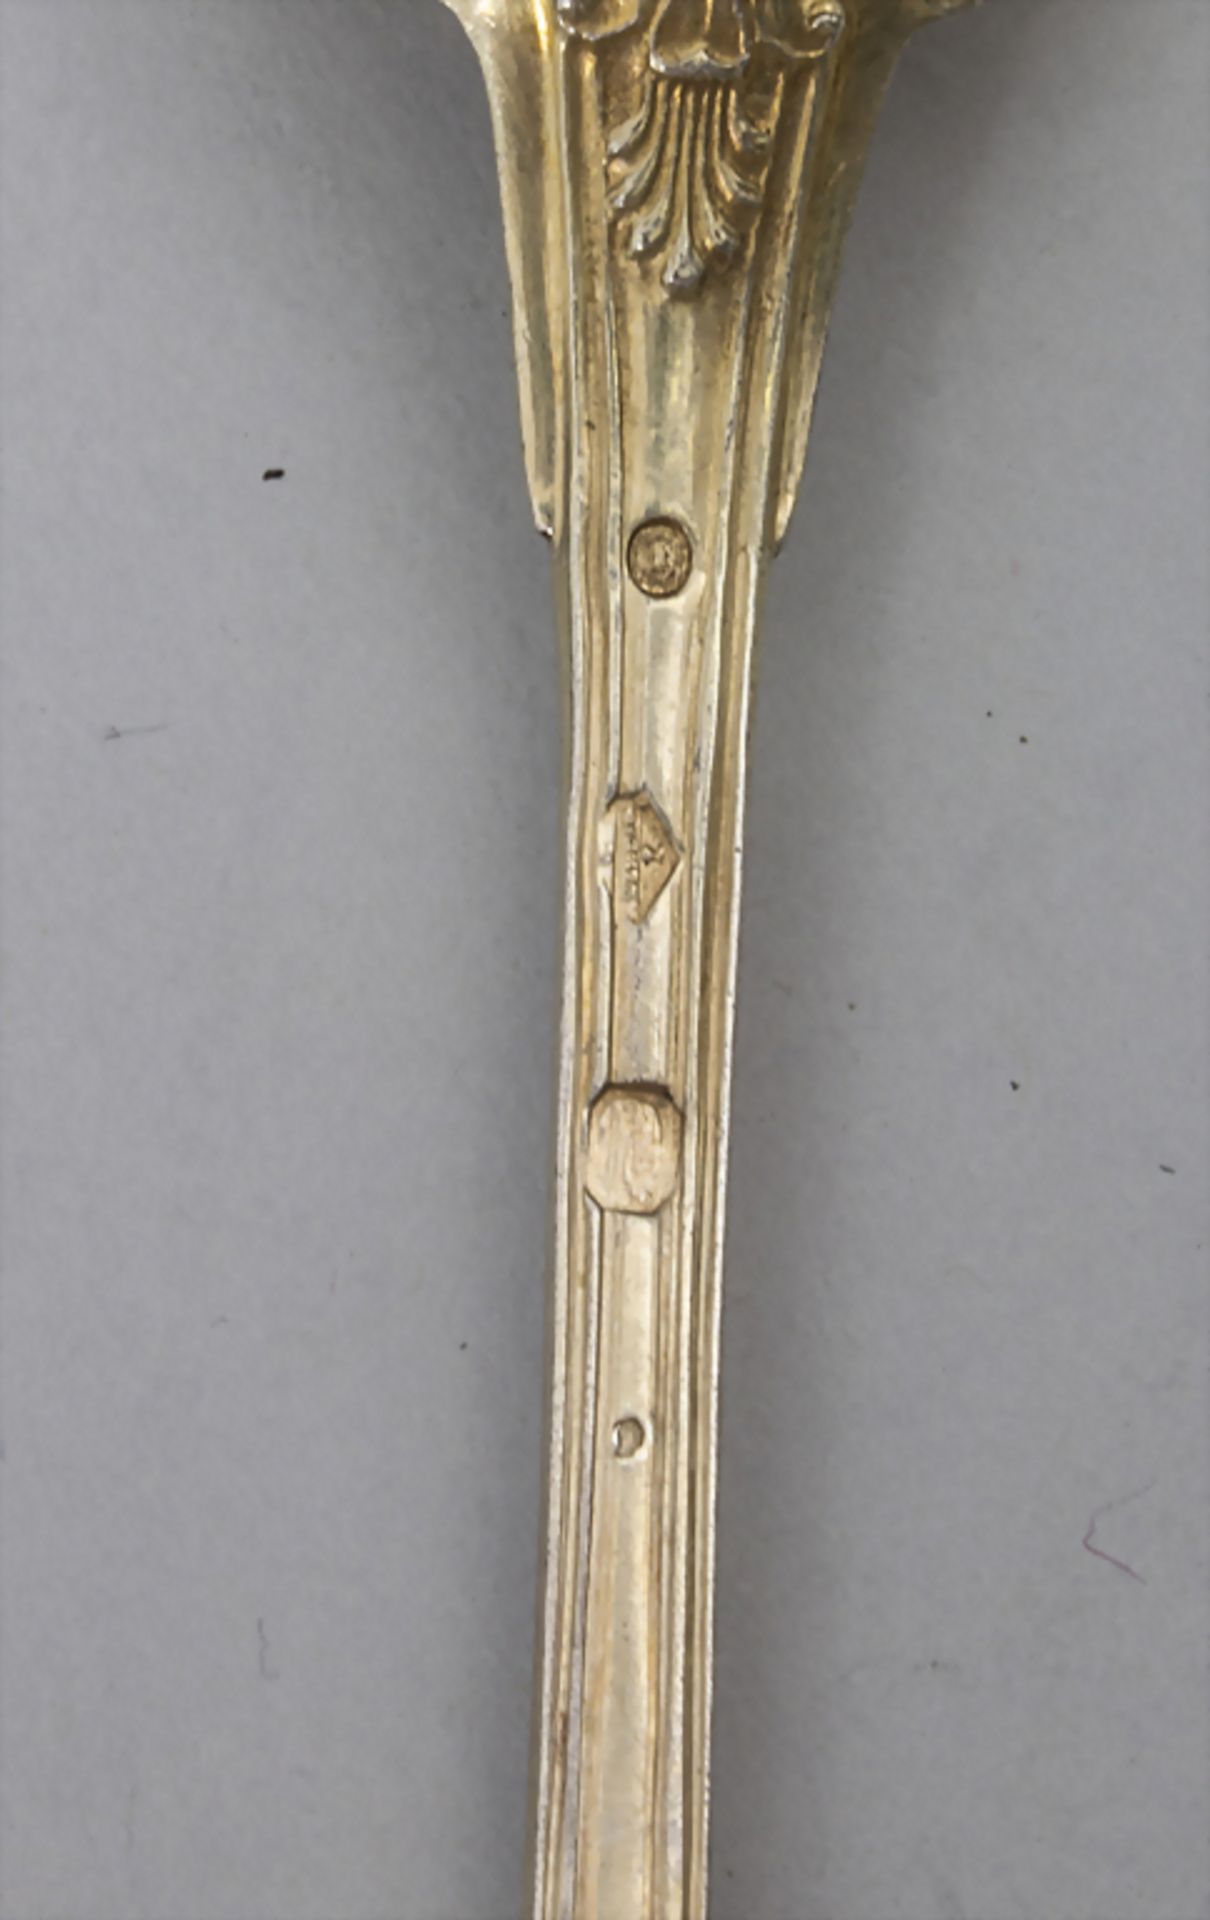 36 tlg. Silberbesteck / A 36-piece set of silver cutlery, Charles Salomon Mahler, Paris, 1824-18 - Bild 6 aus 15